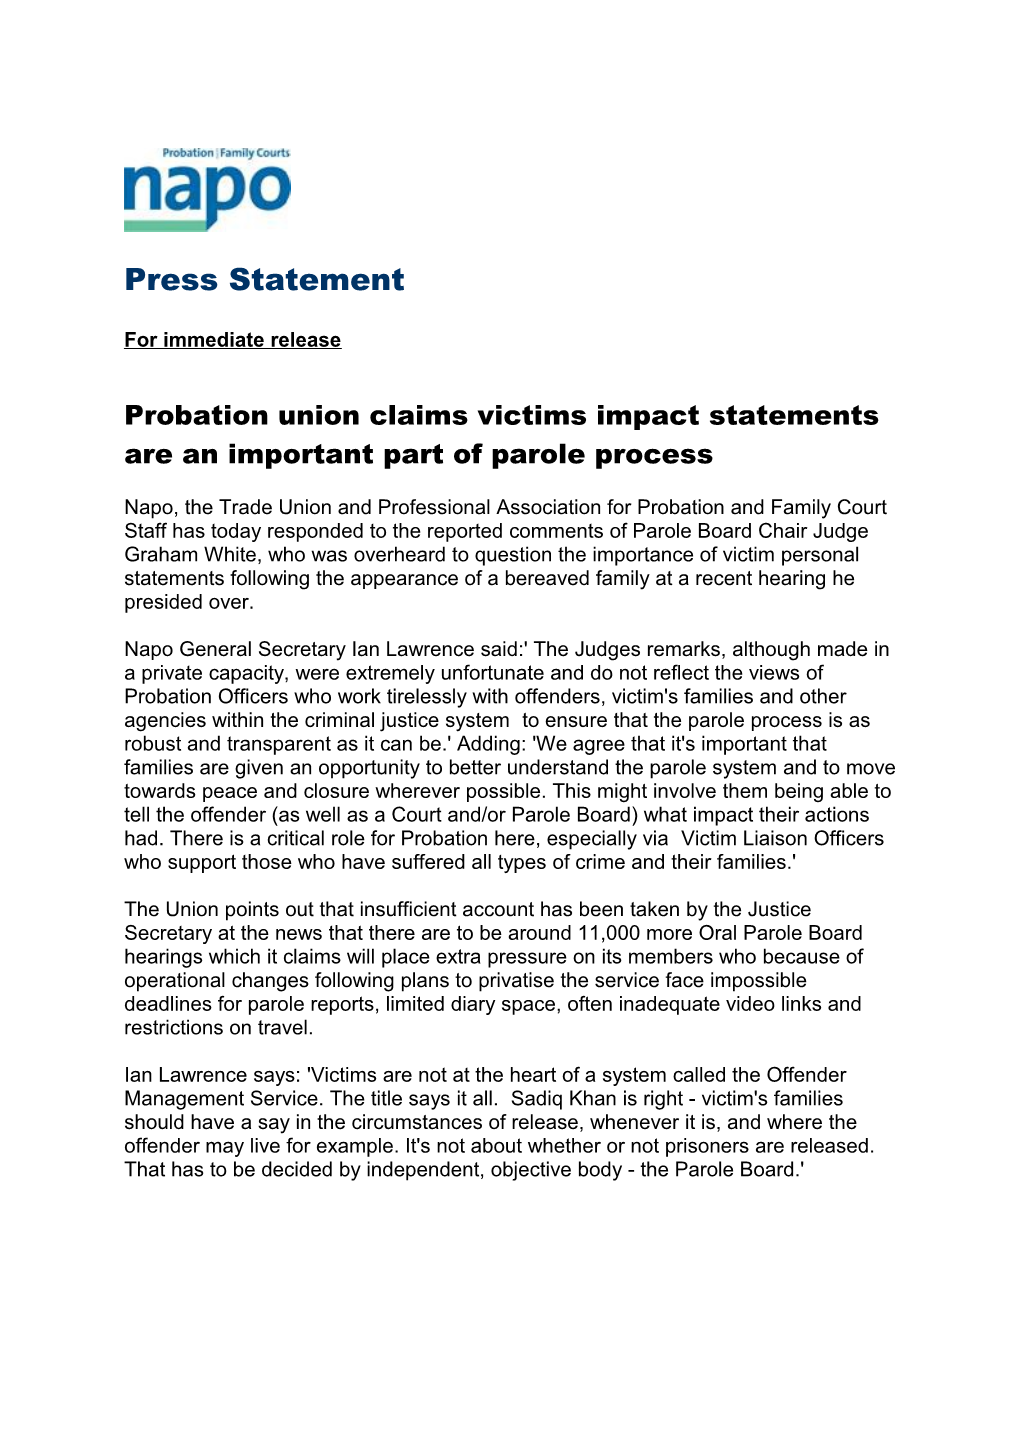 Probation Union Claims Victims Impact Statements Are an Important Part of Parole Process